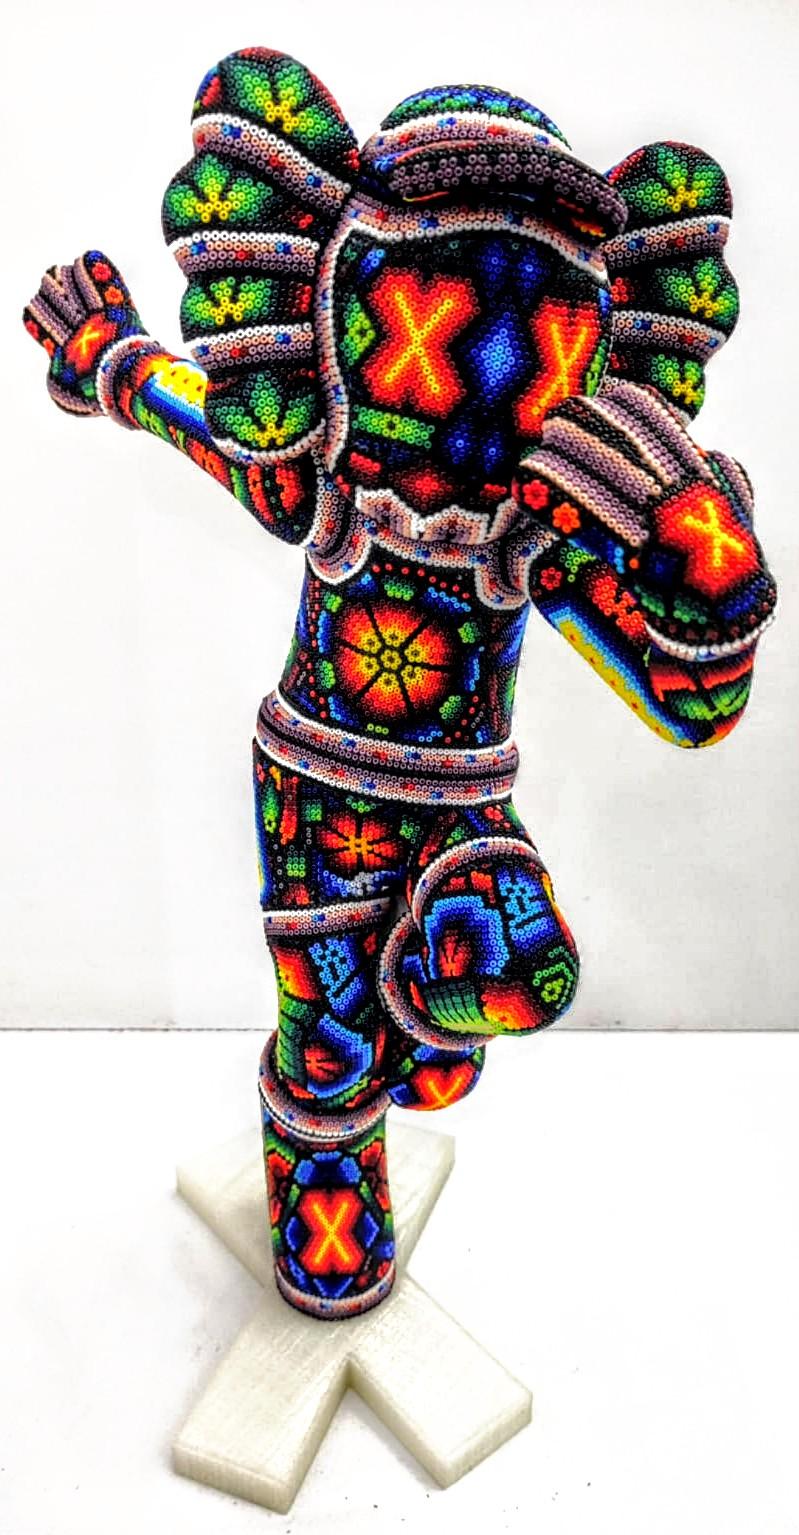 Hip Hop Dancer Mini from Dance Huichol Series - Sculpture by CHROMA aka Rick Wolfryd 